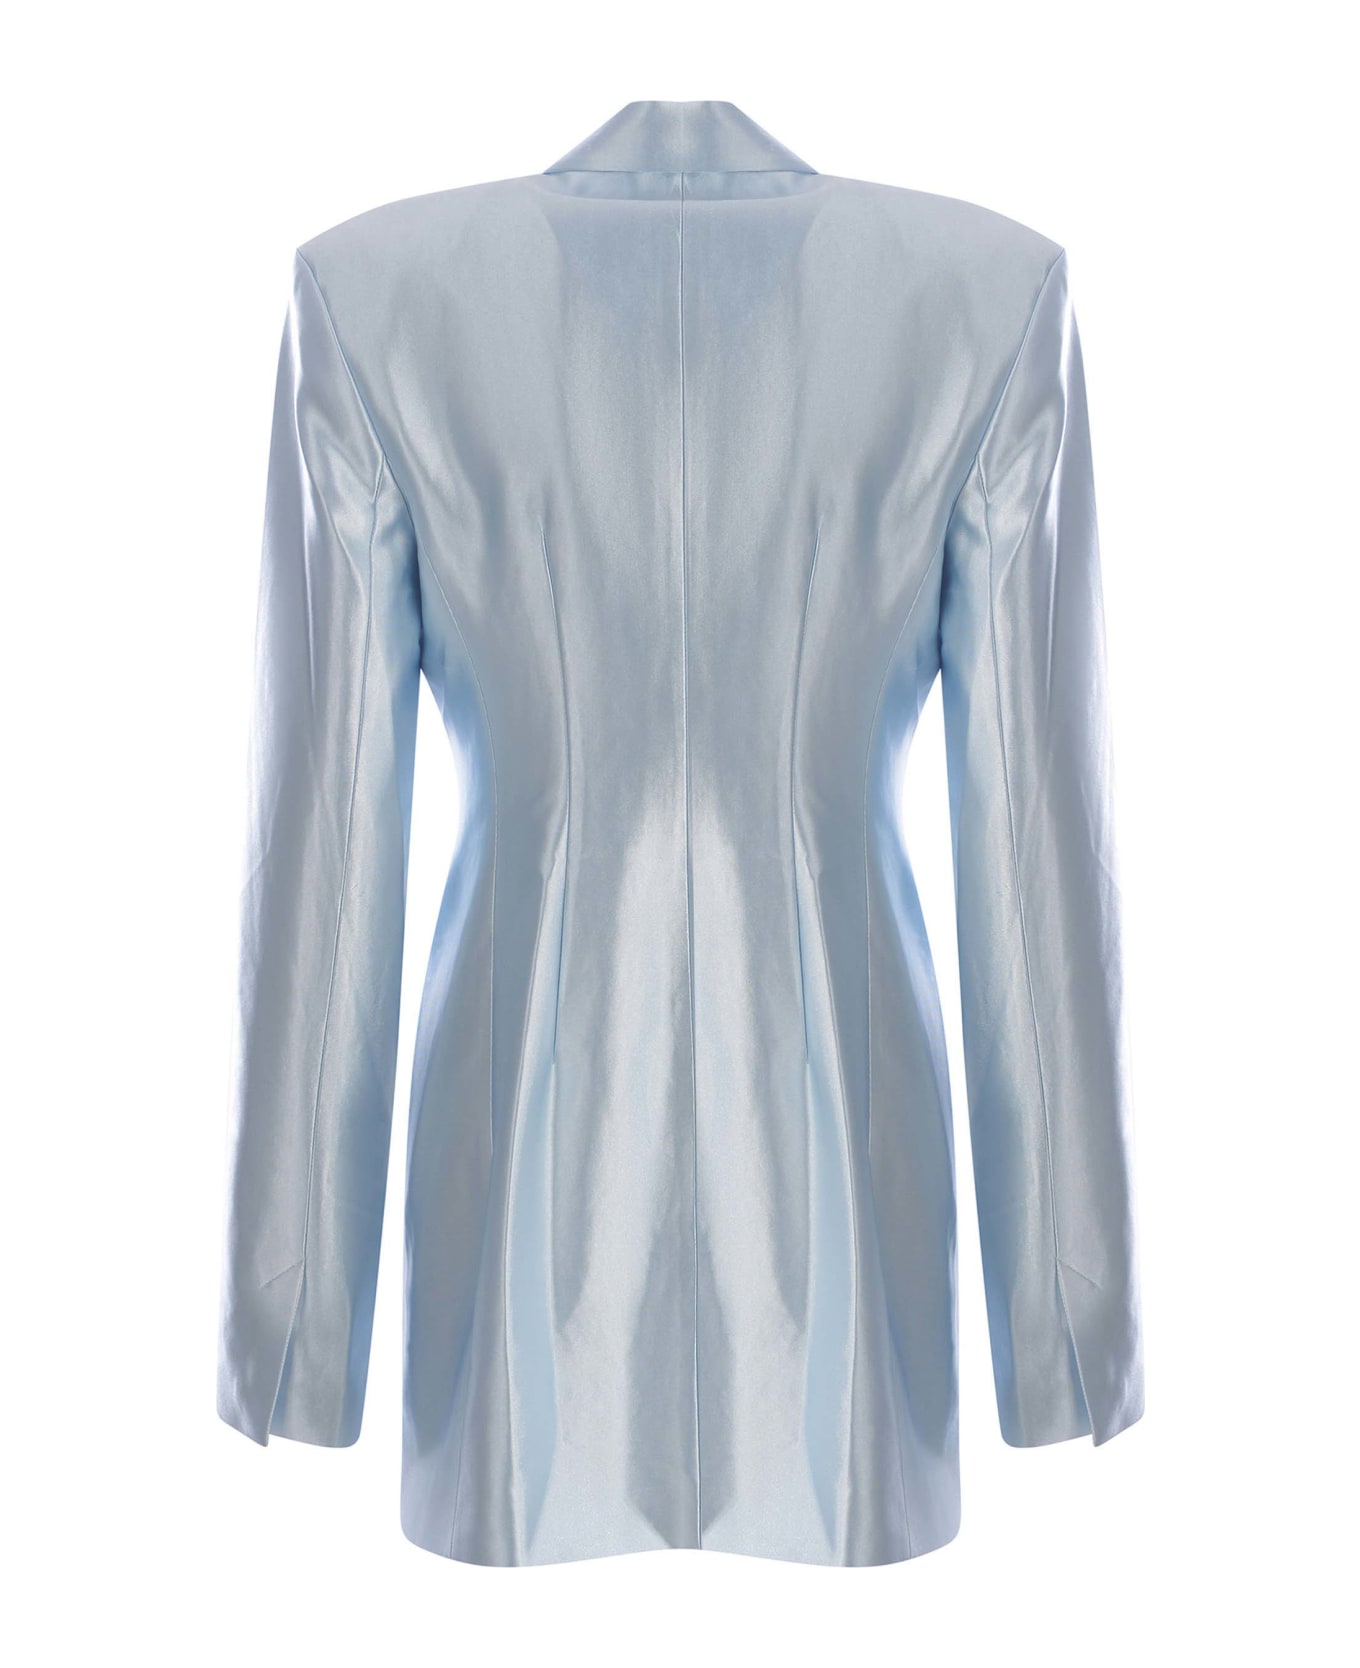 Rotate by Birger Christensen Blazer Dress Rotate Made Of Satin - Celeste polvere